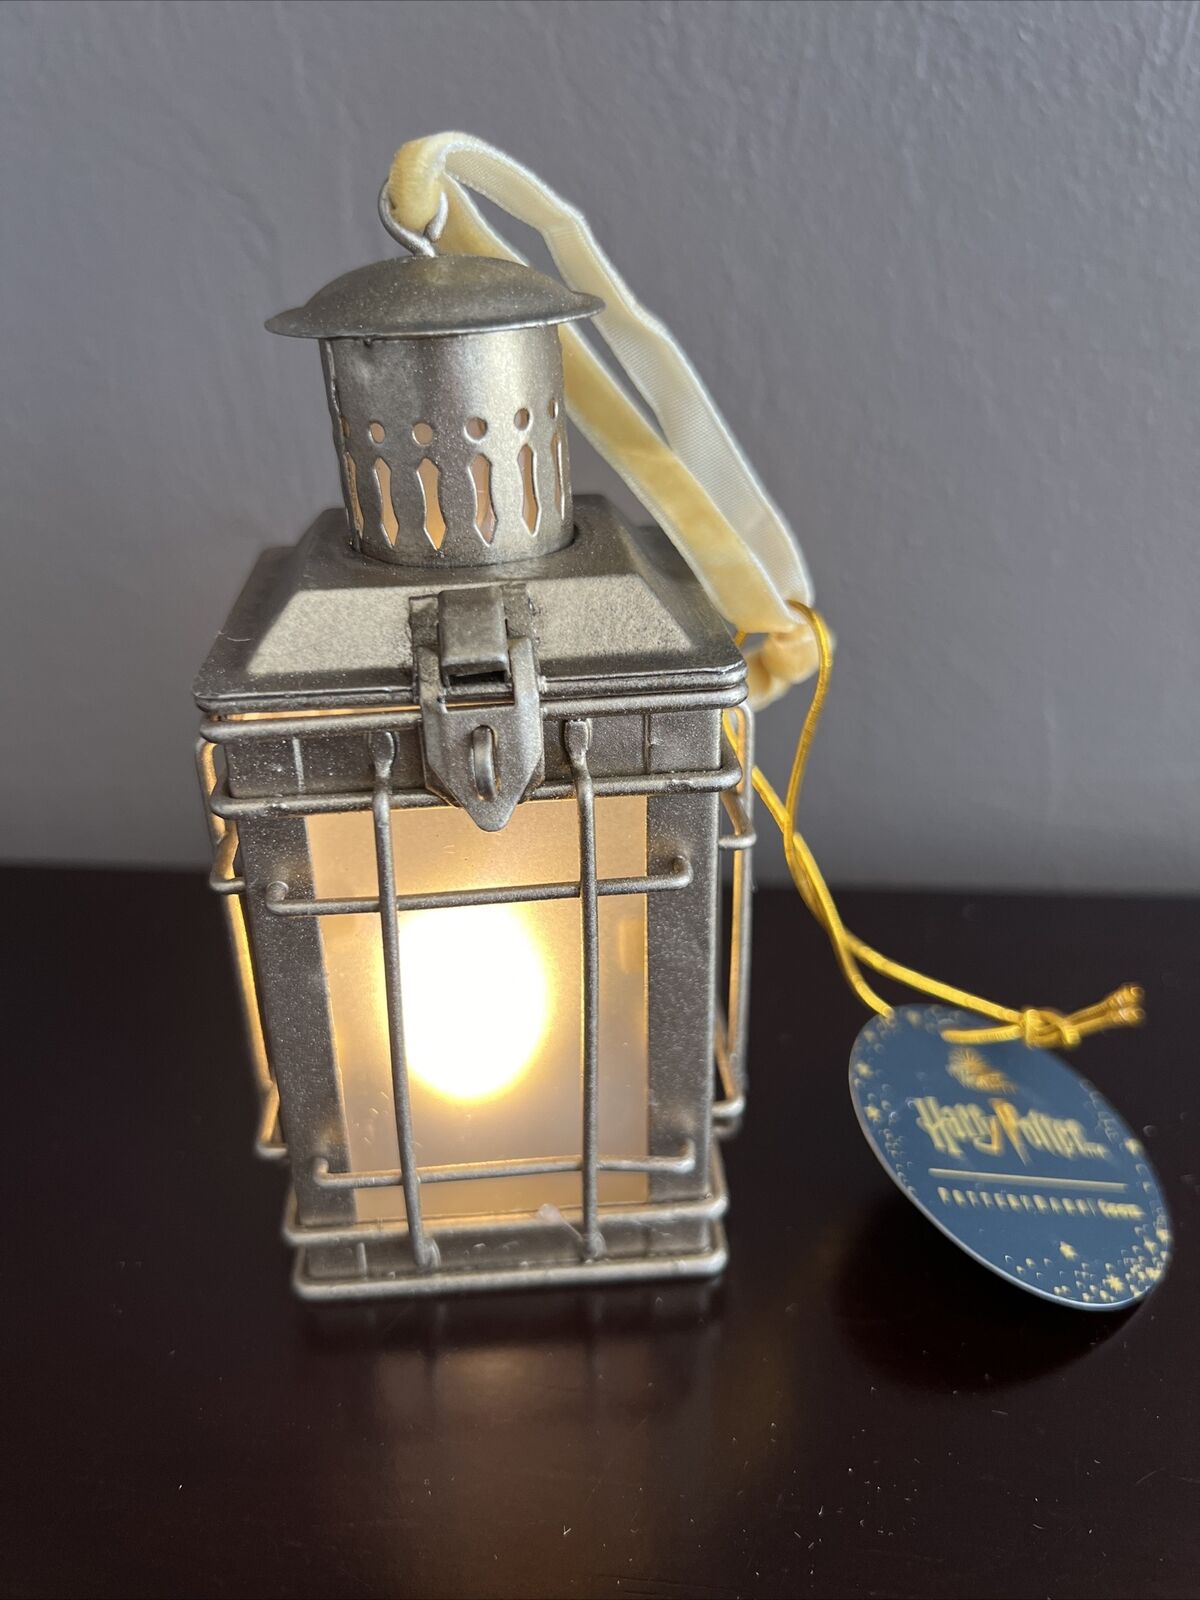 New Pottery Barn Teen Harry Potter Hagrid’s Lantern Light-Up Ornament - NWT